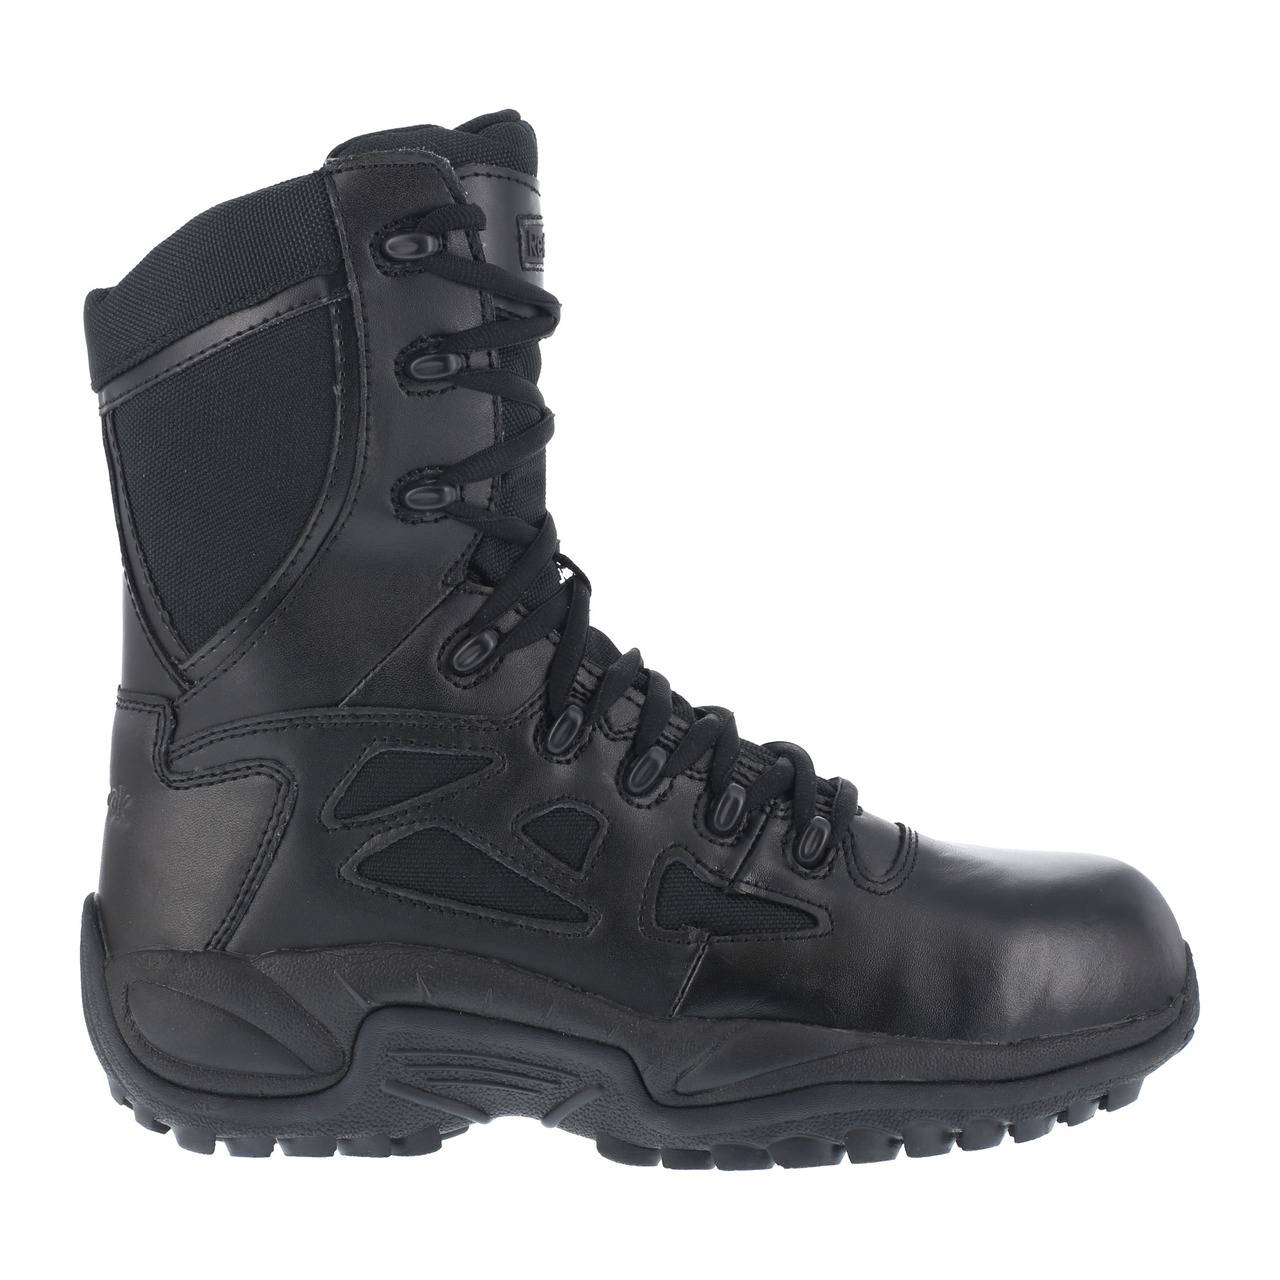 Reebok Rapid Response Side Zip Boots Black